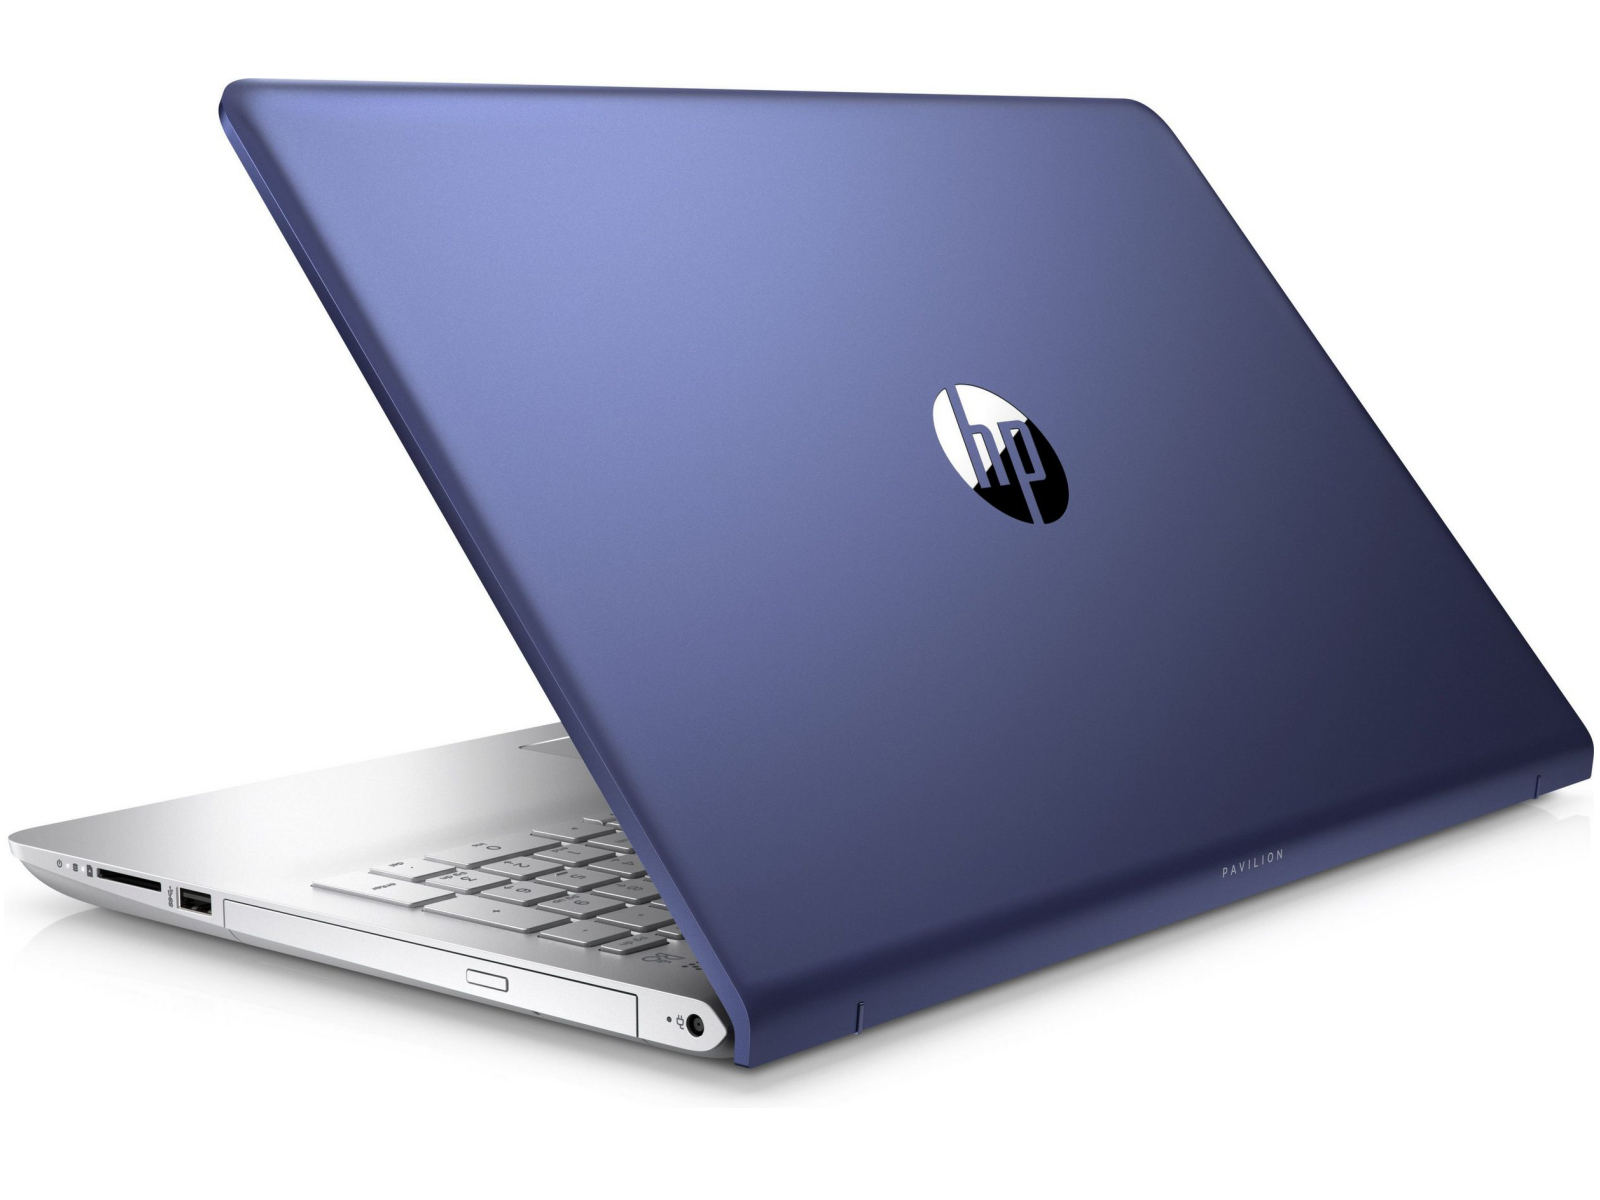 HP Pavilion 15 (Core i5-8250U, NVIDIA MX130) Laptop Review - NotebookCheck.net Reviews